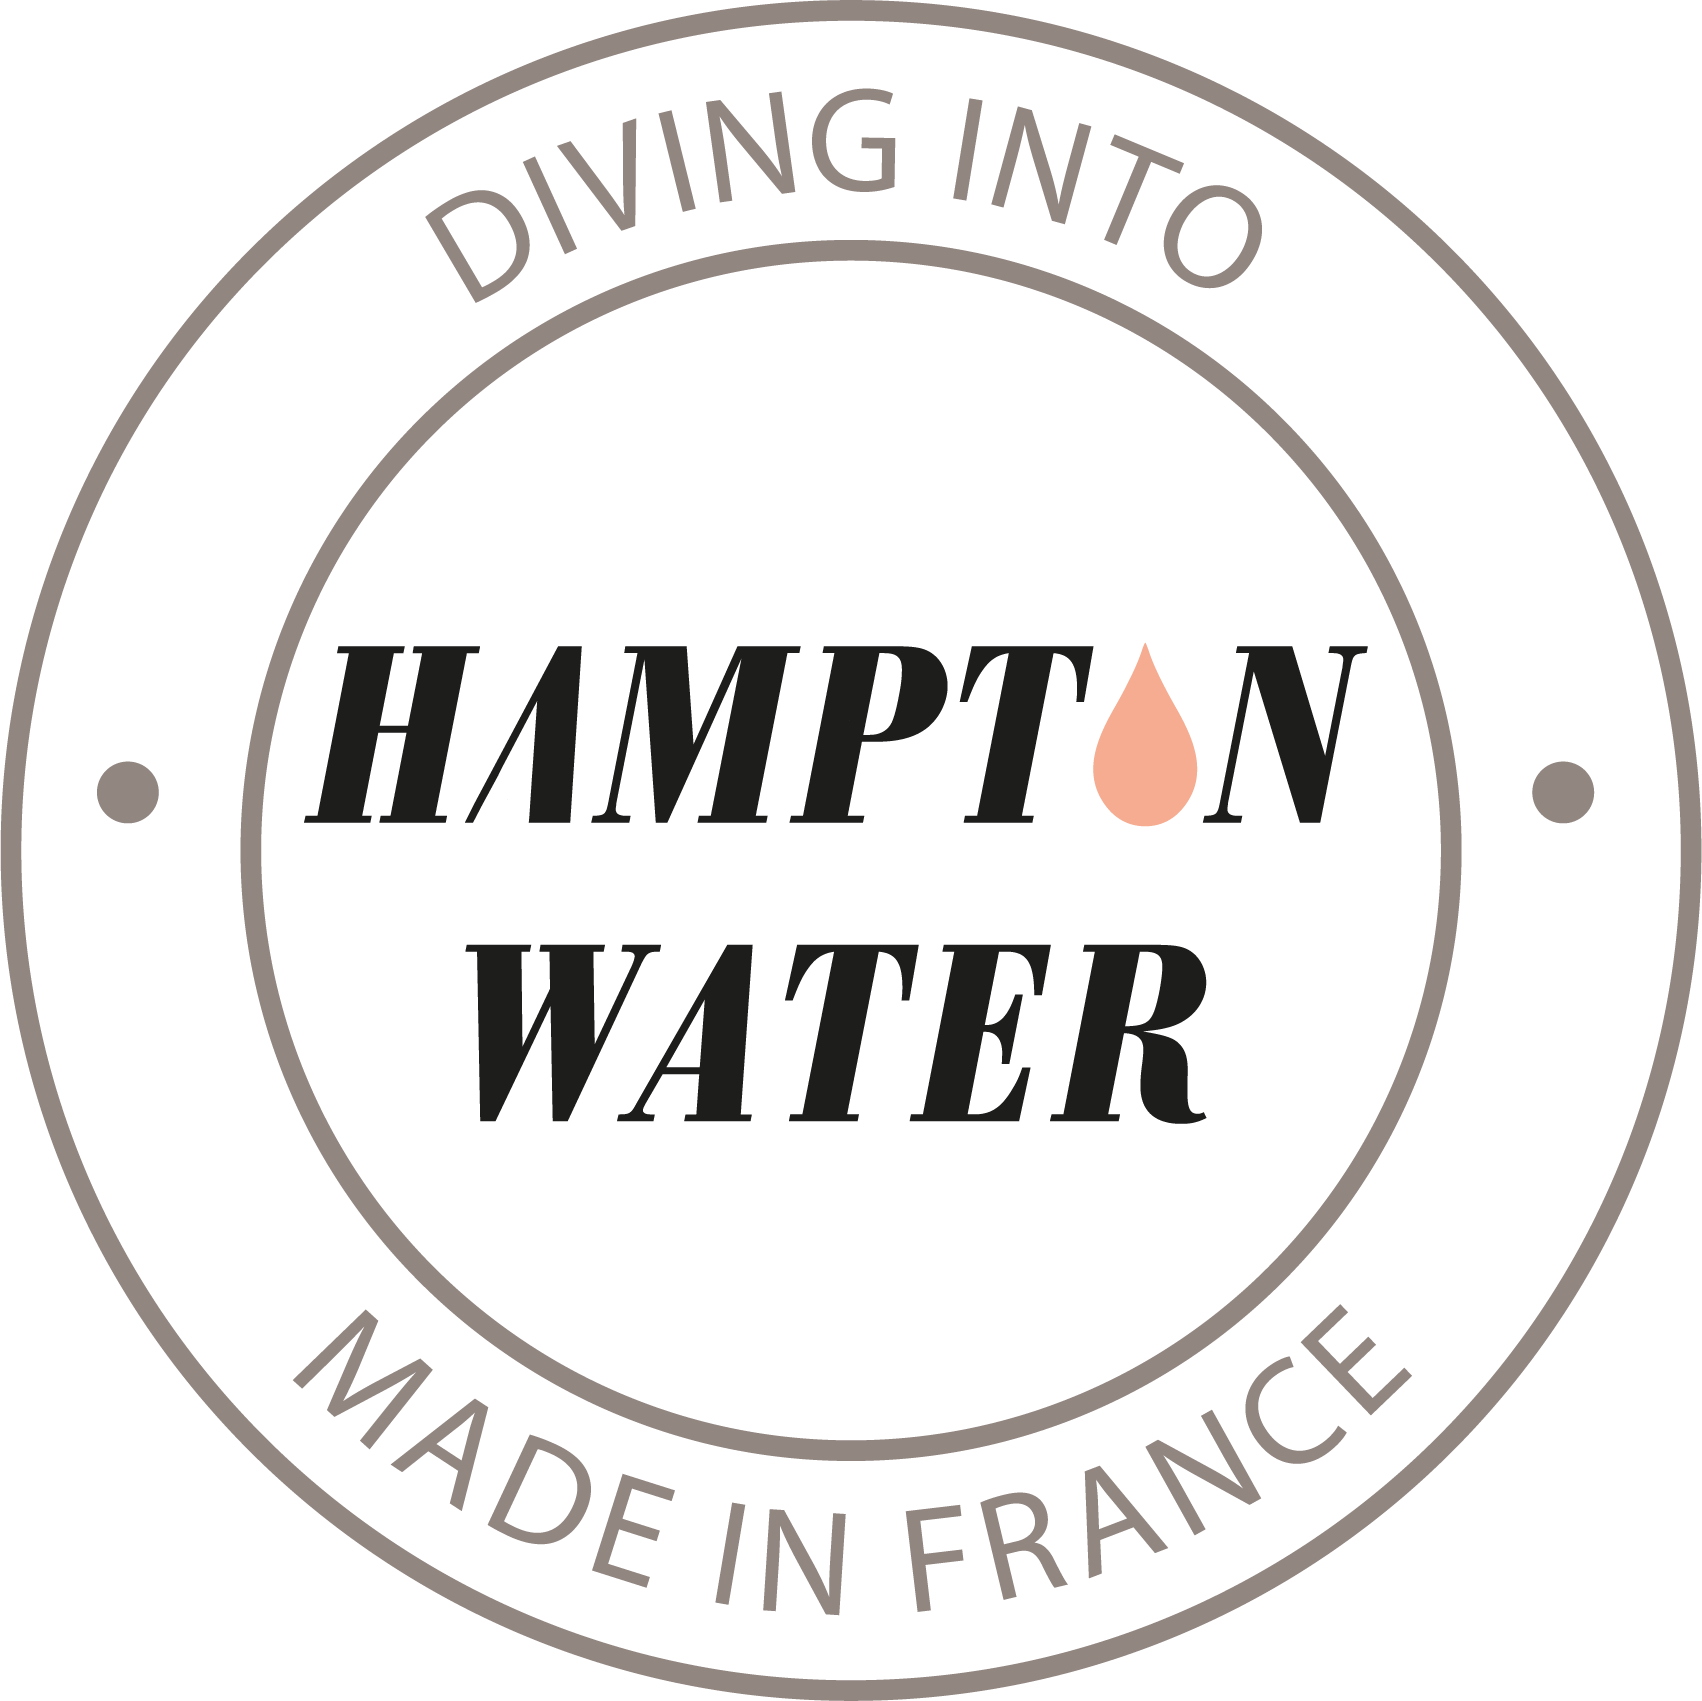 Wine.com Logo - Hampton Water Wine | Rose made in France, enjoyed everywhere